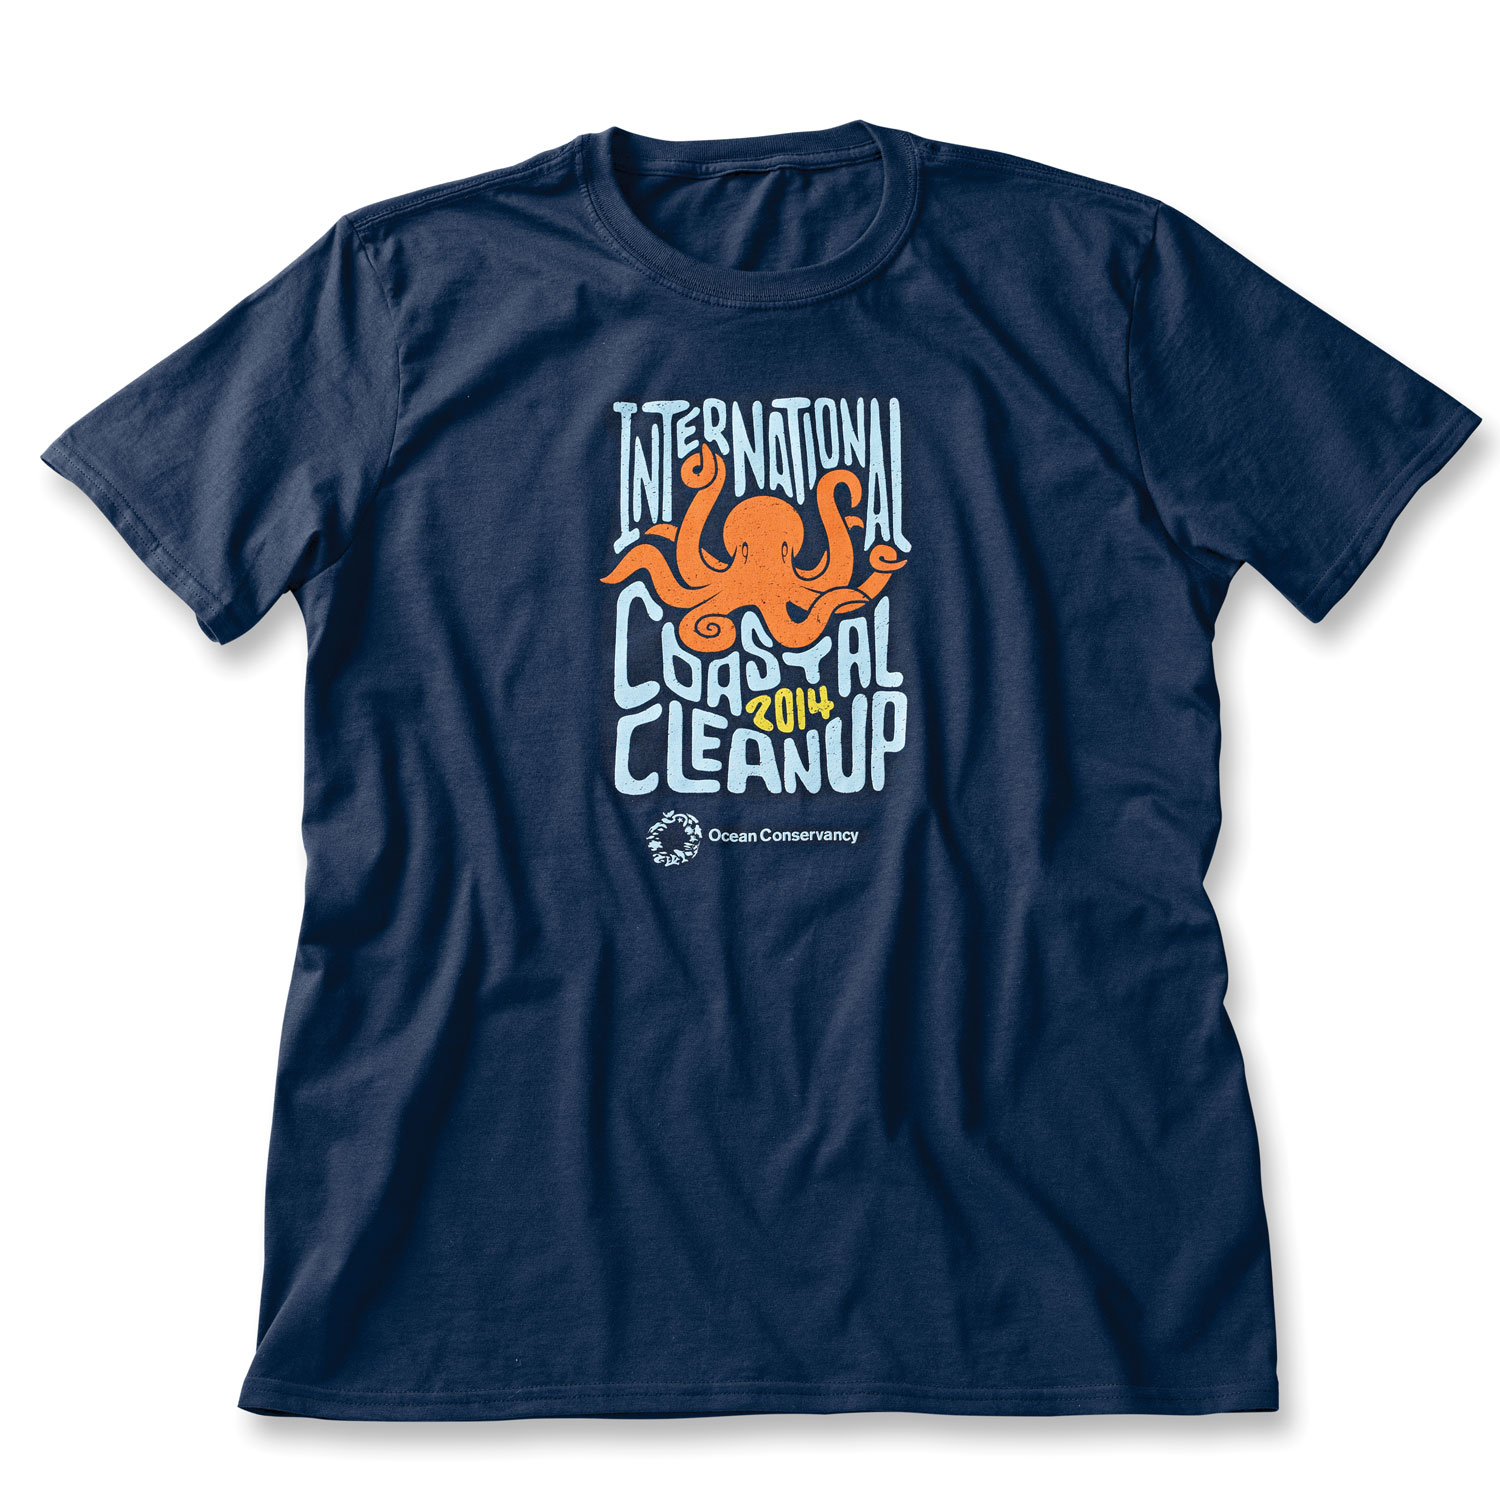  International Coastal Cleanup T-shirt 